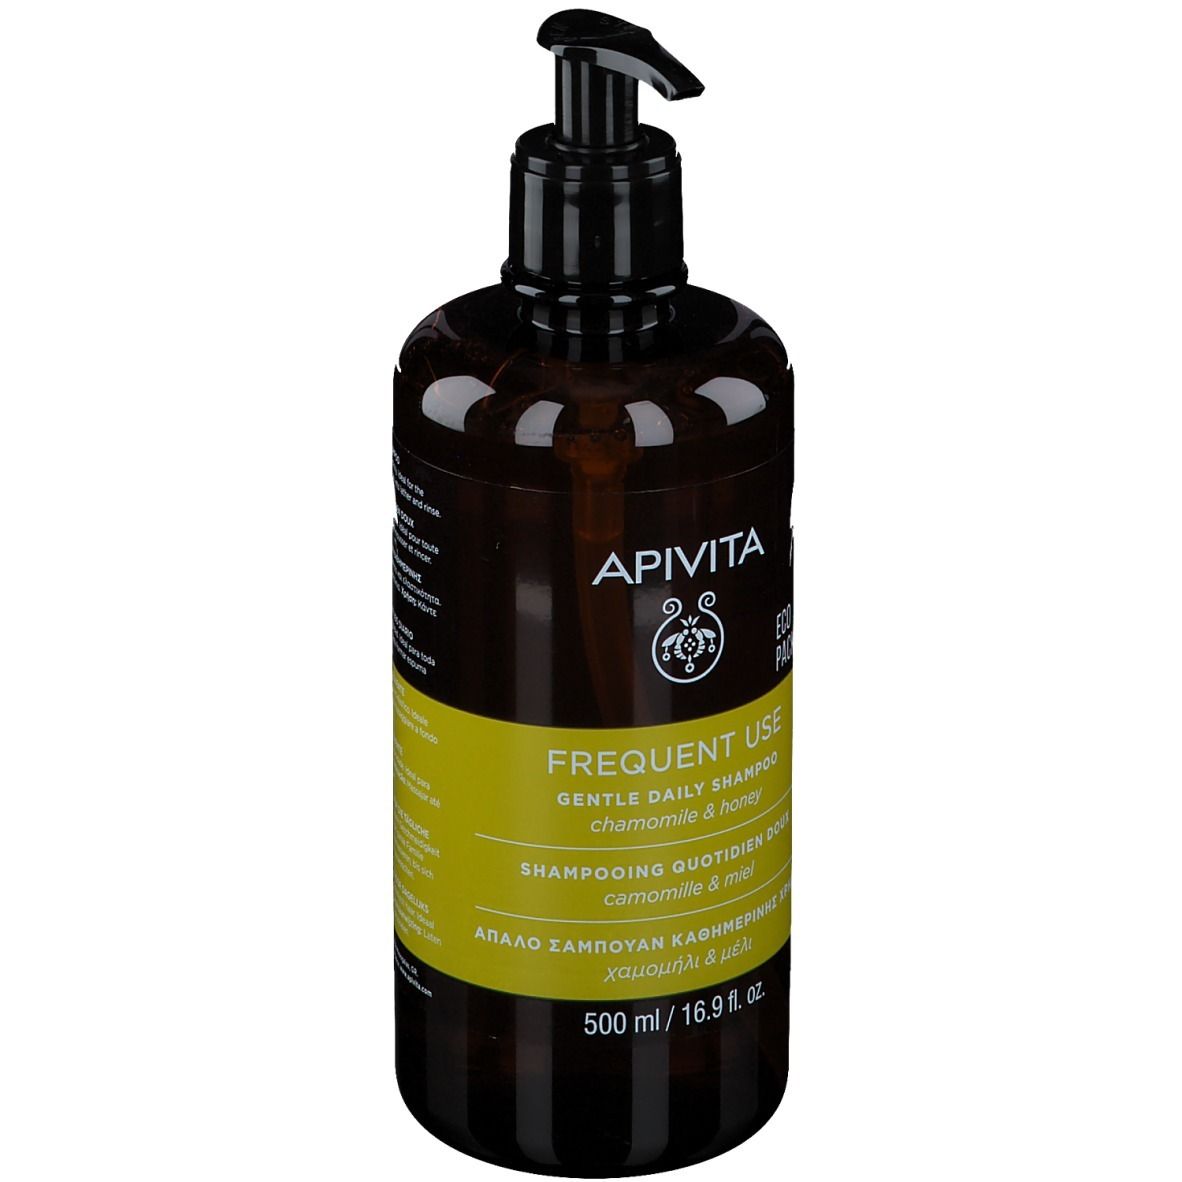 Apivita schonendes tägliches Shampoo